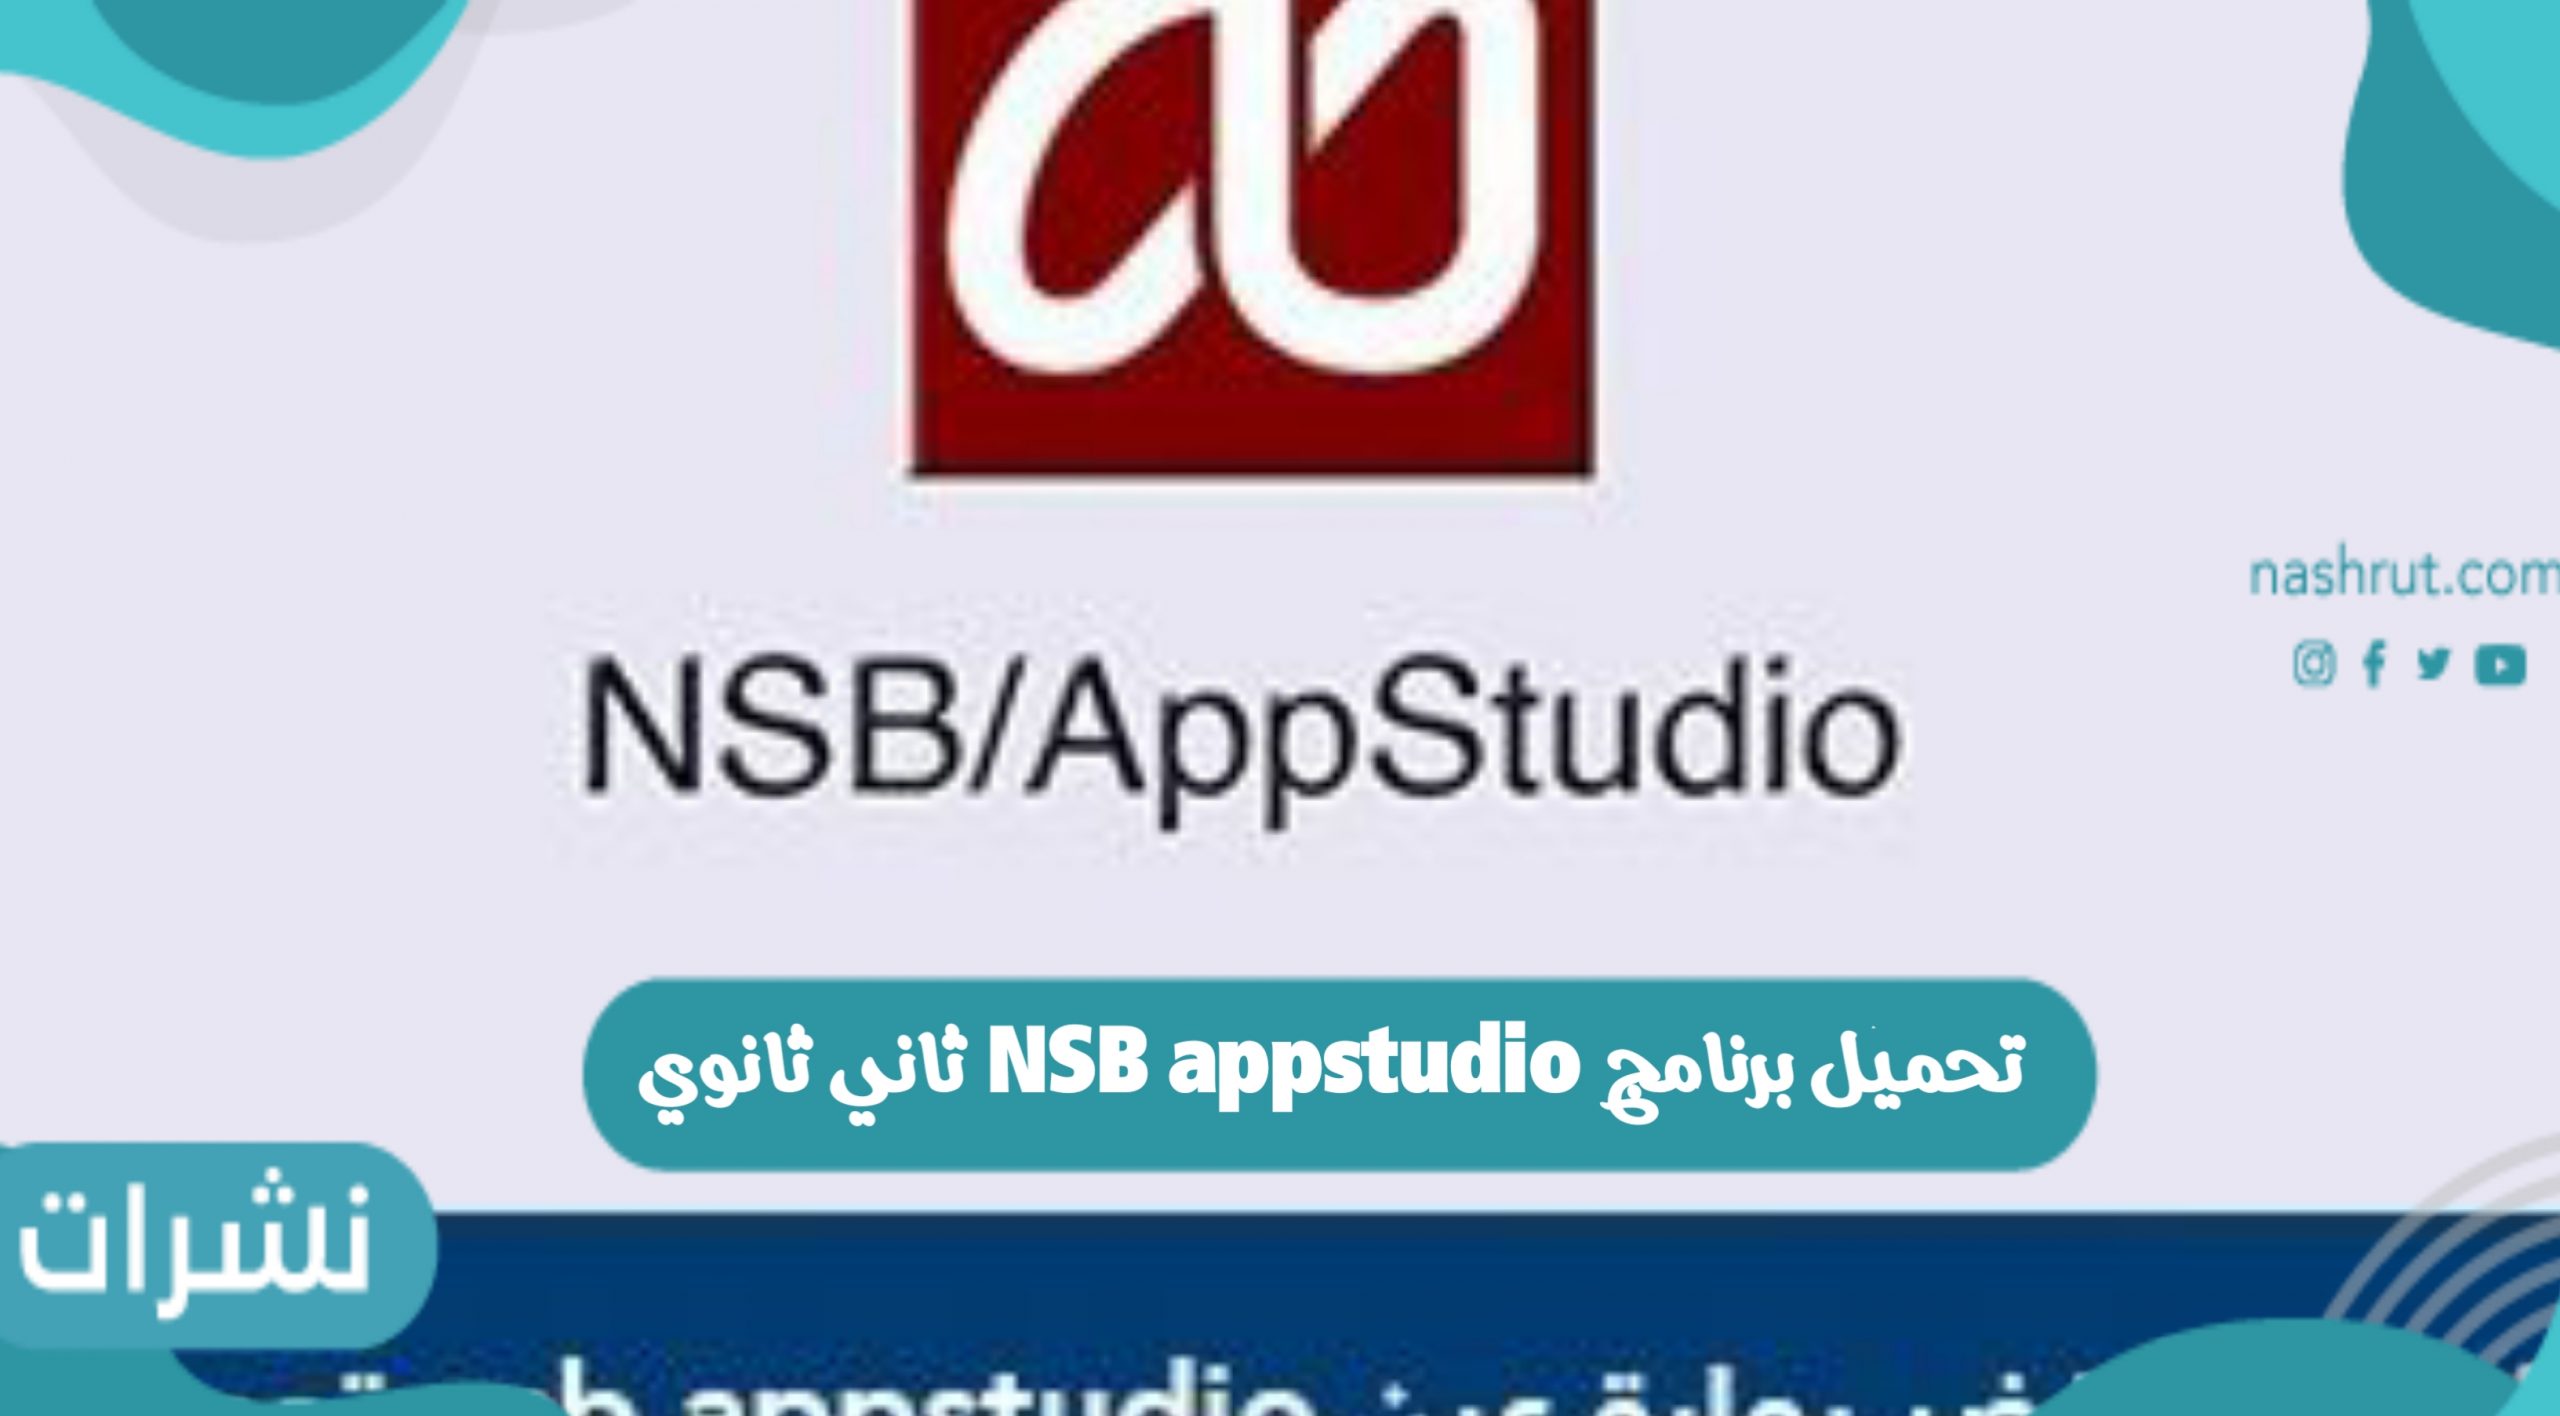 تحميل برنامج NSB appstudio ثاني ثانوي مجانا برابط مباشر لعام 2021 نشرات